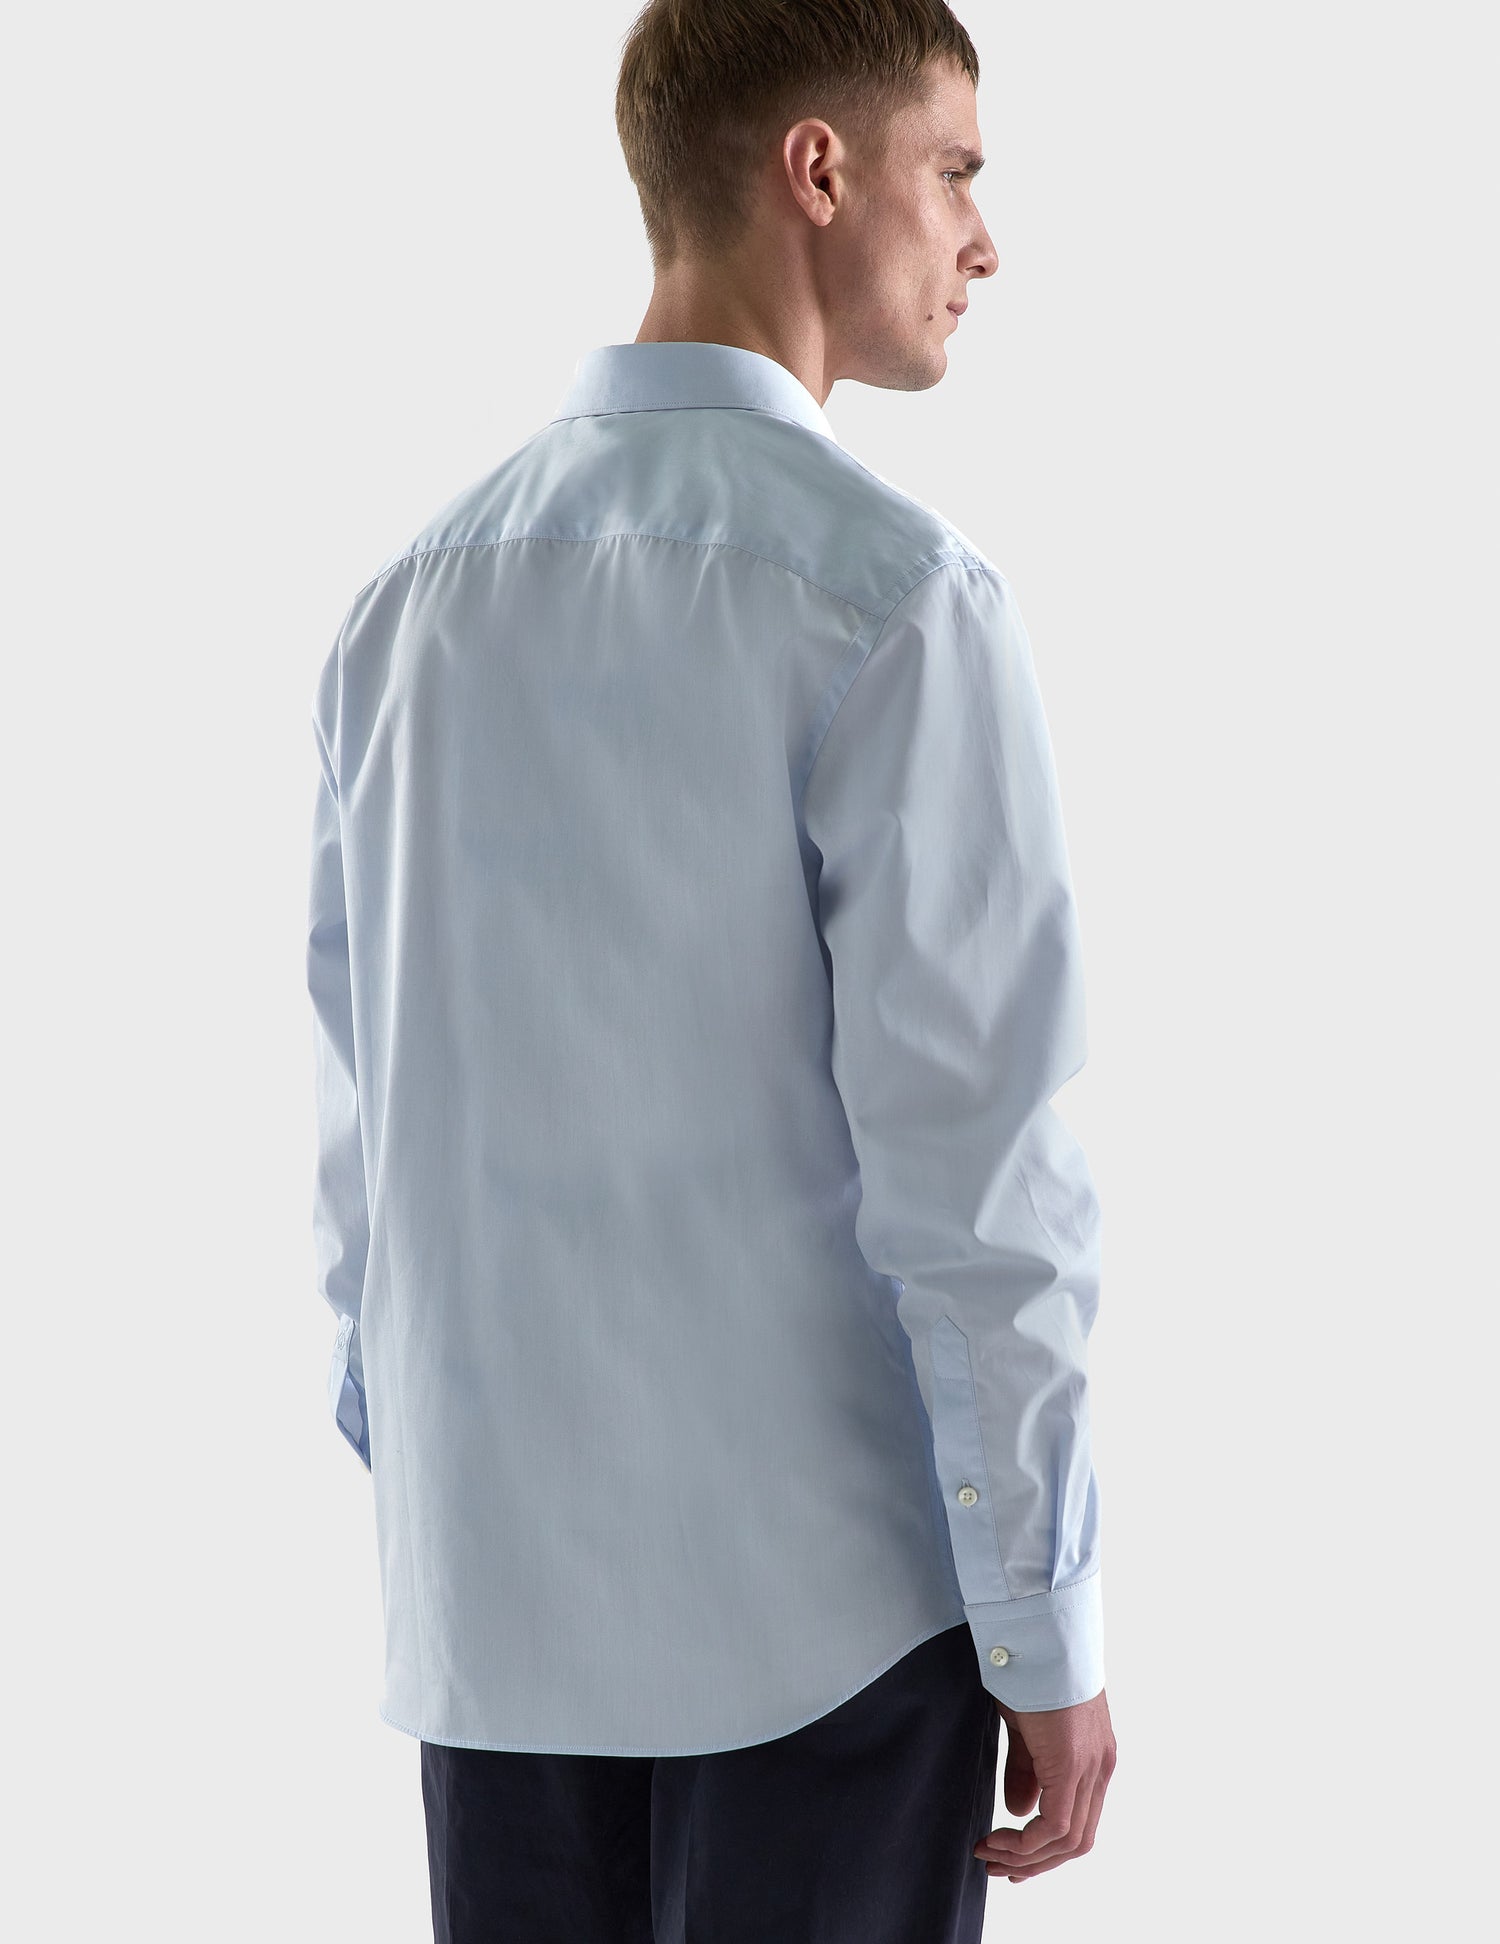 Semi-fitted wrinkle-free blue shirt - Poplin - Figaret Collar#4